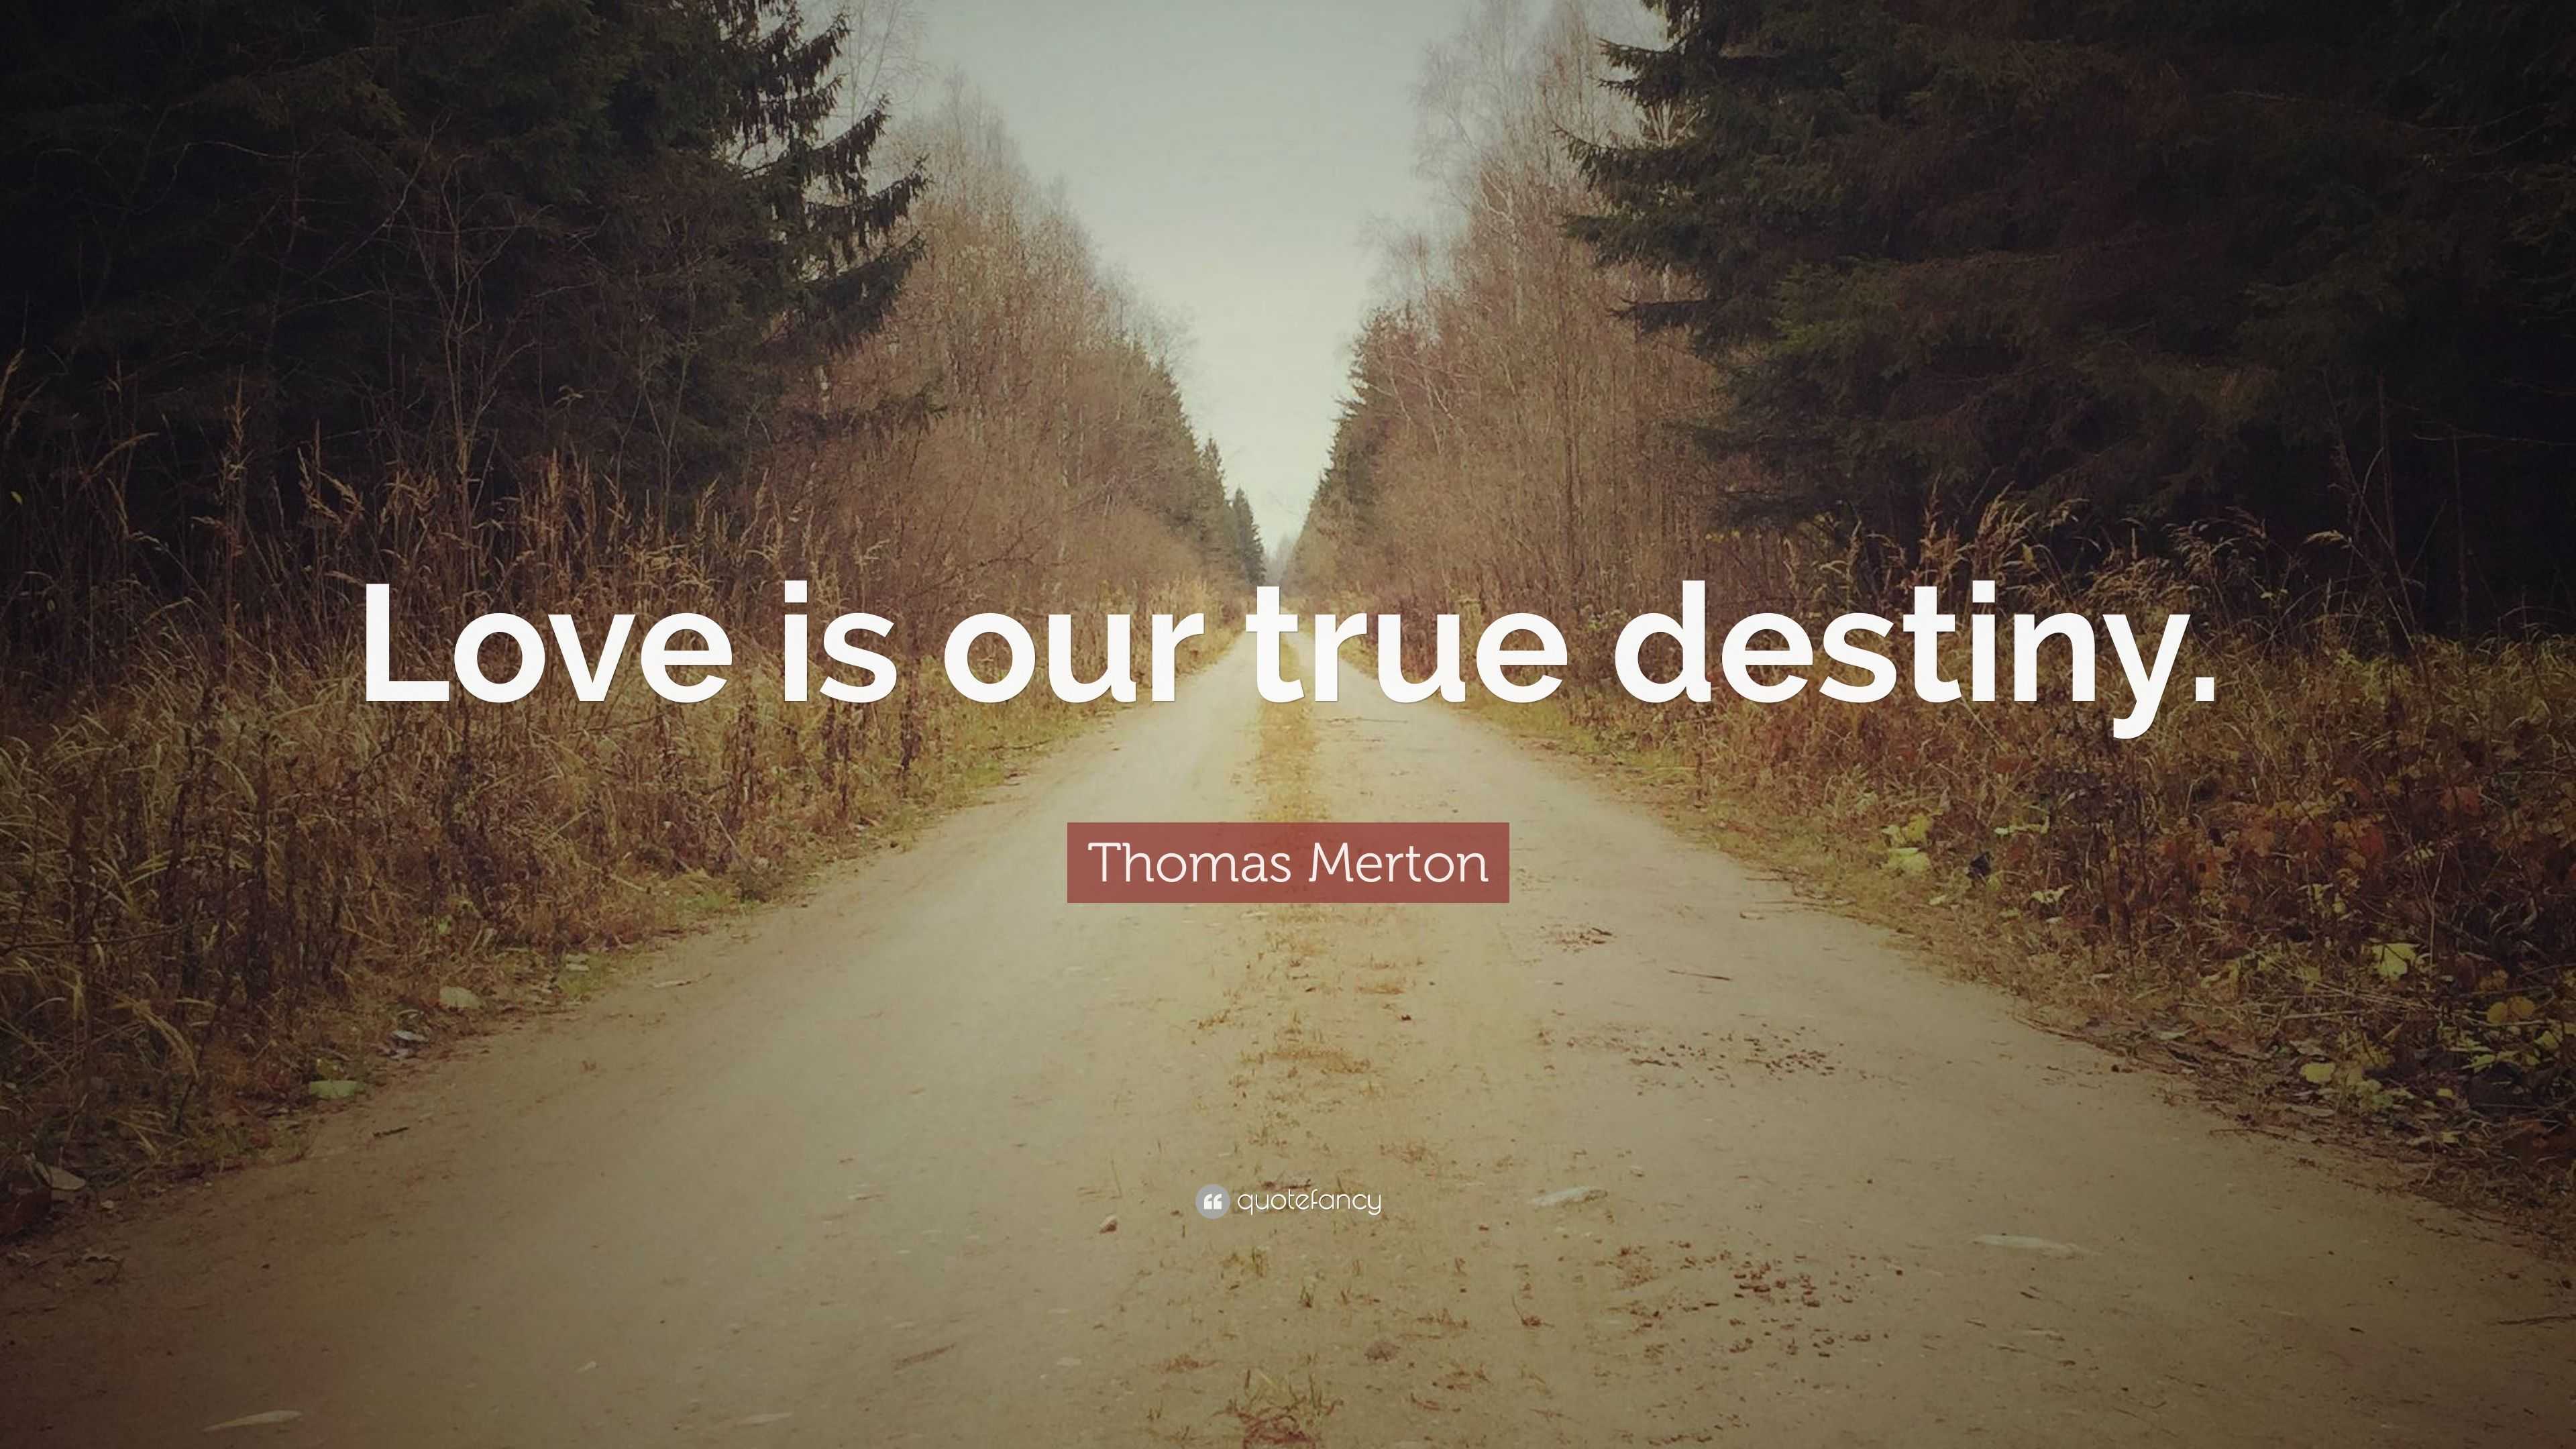 Thomas Merton Quote “Love is our true destiny ”